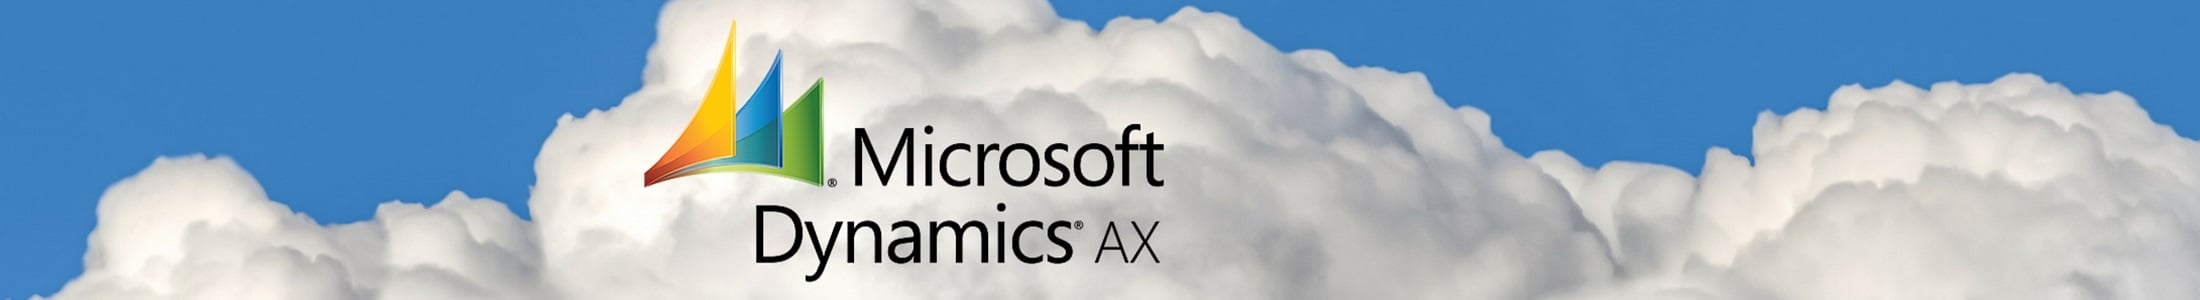 microsoft dynamics ax cloud